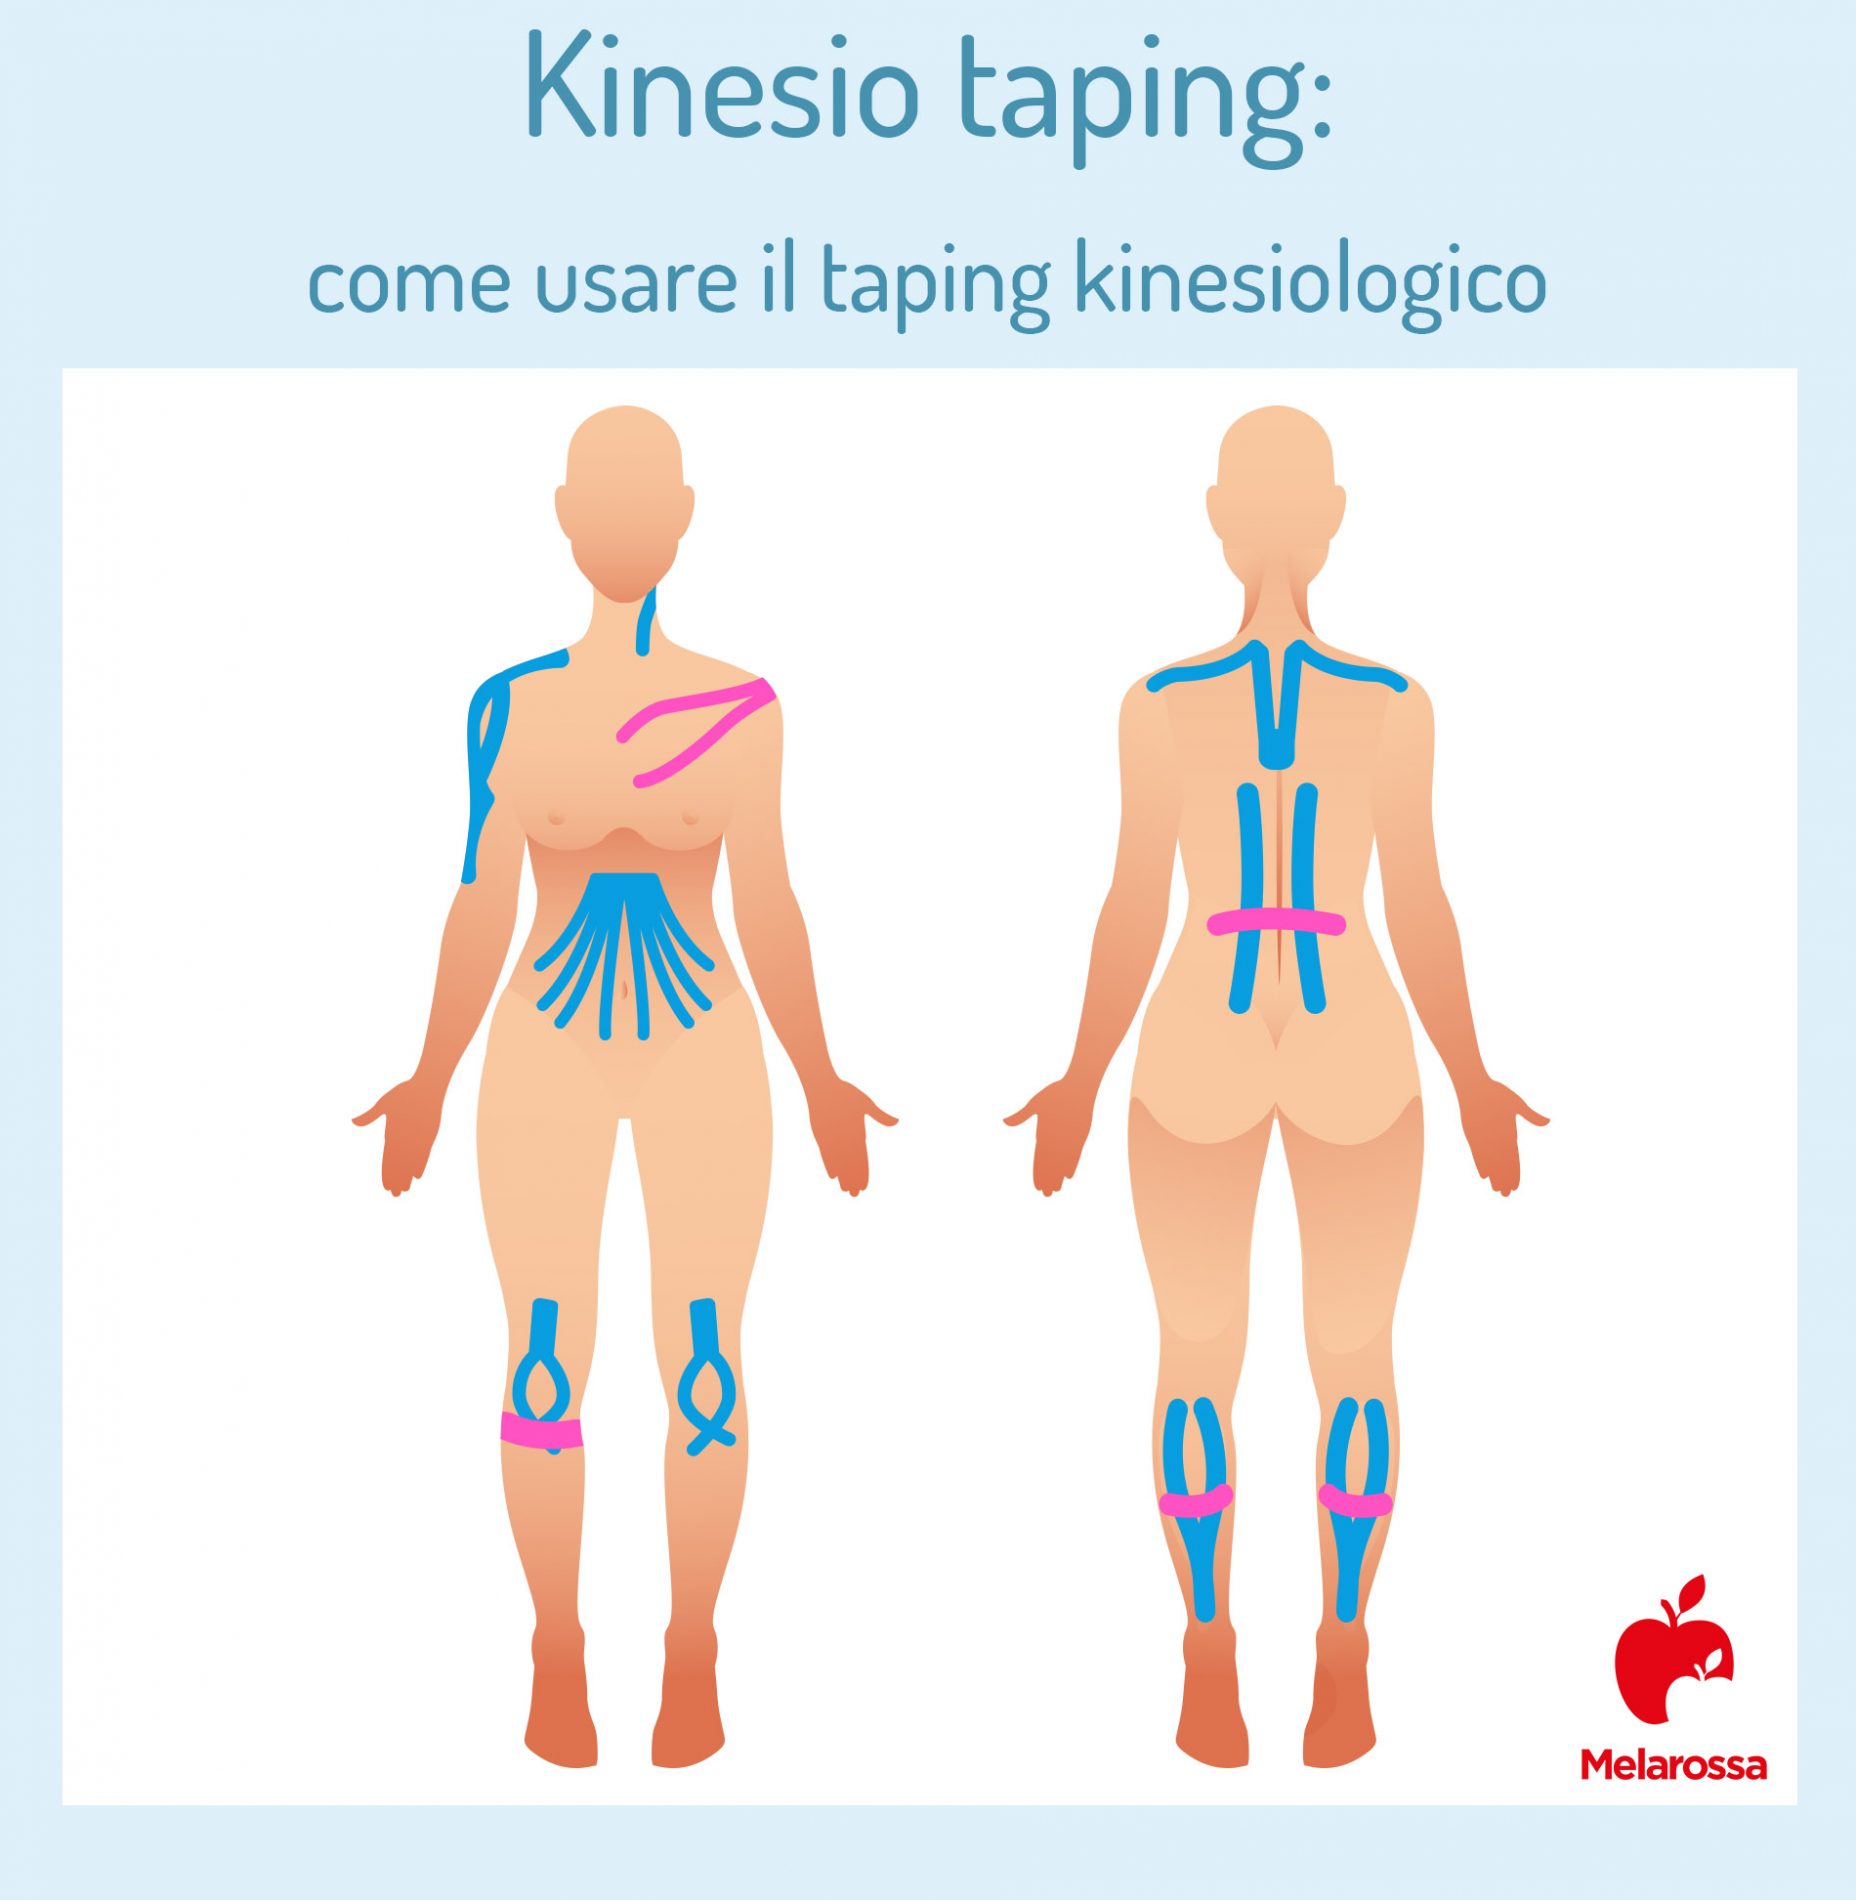 kinesio taping: come usare il tape kinesiologico